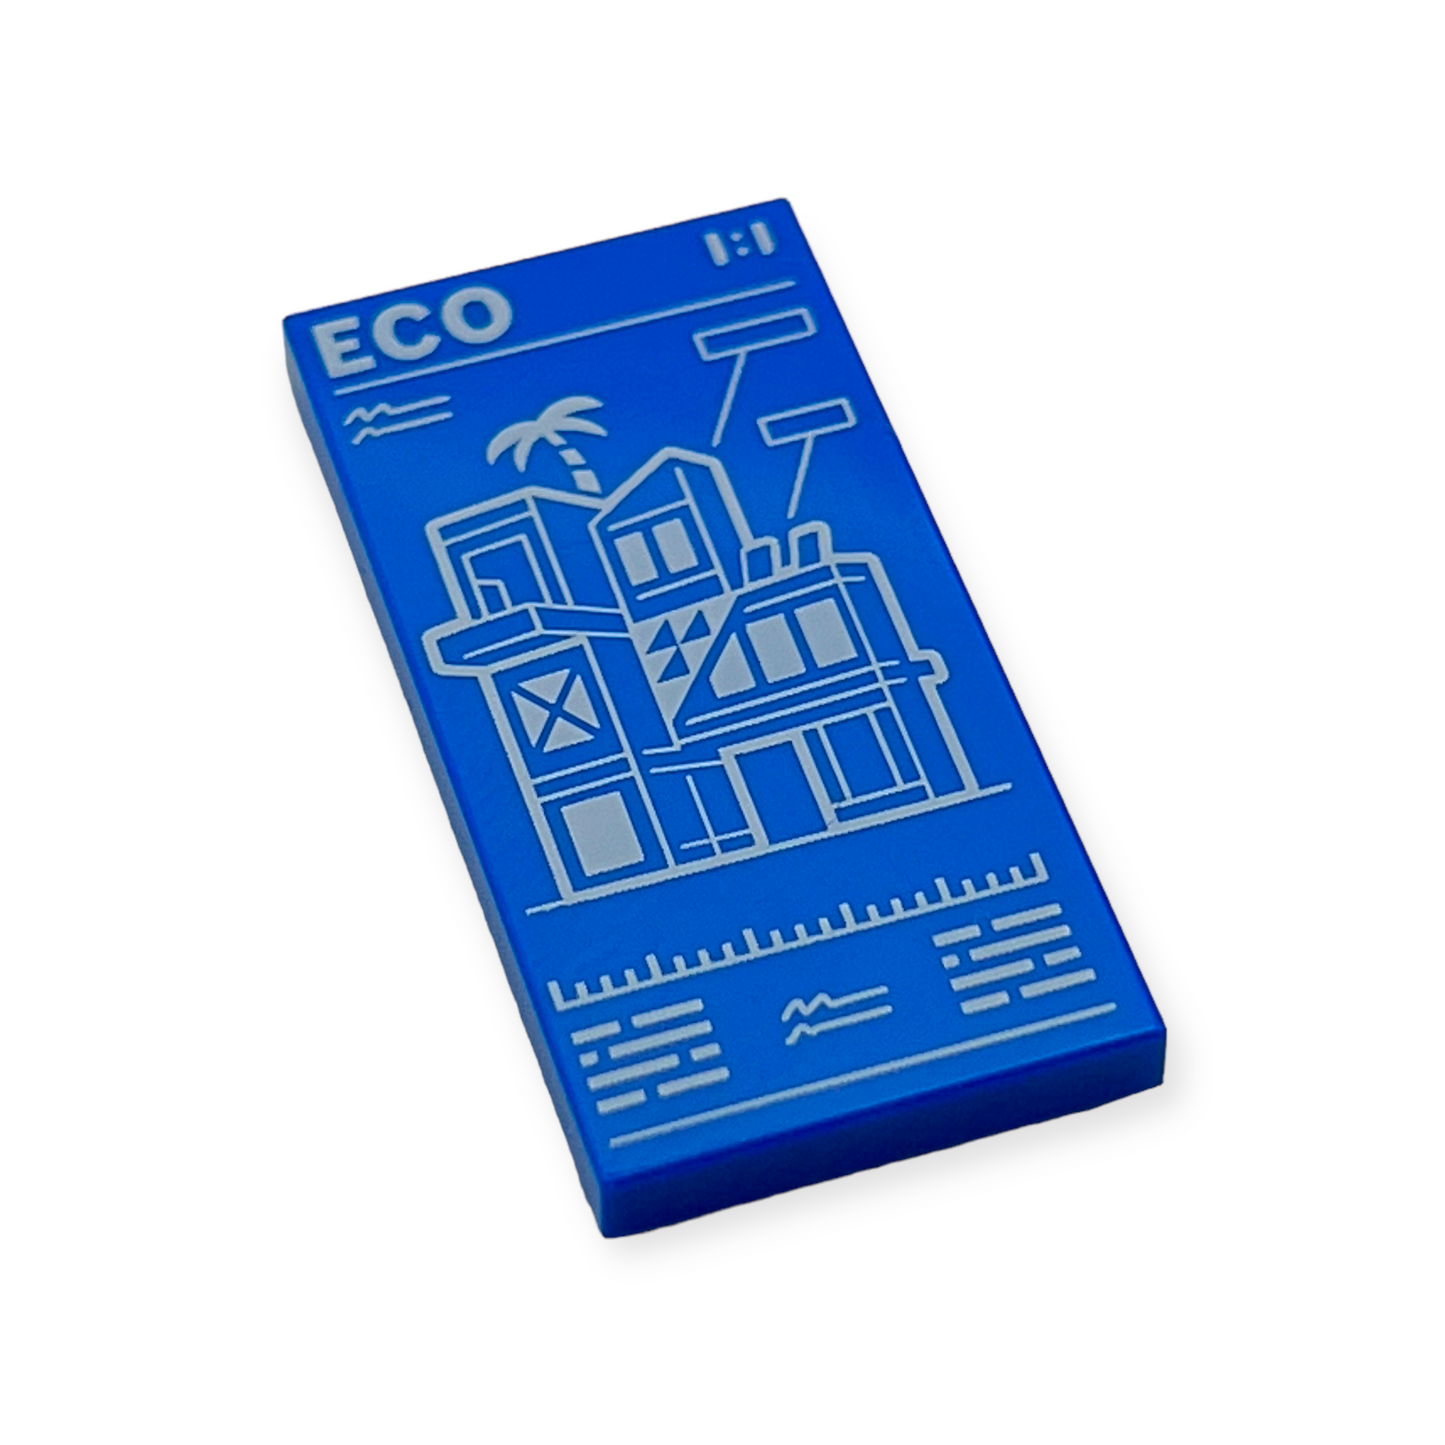 LEGO Tile 2x4 - White ECO 1:1 and City Apartment Building Set 60365